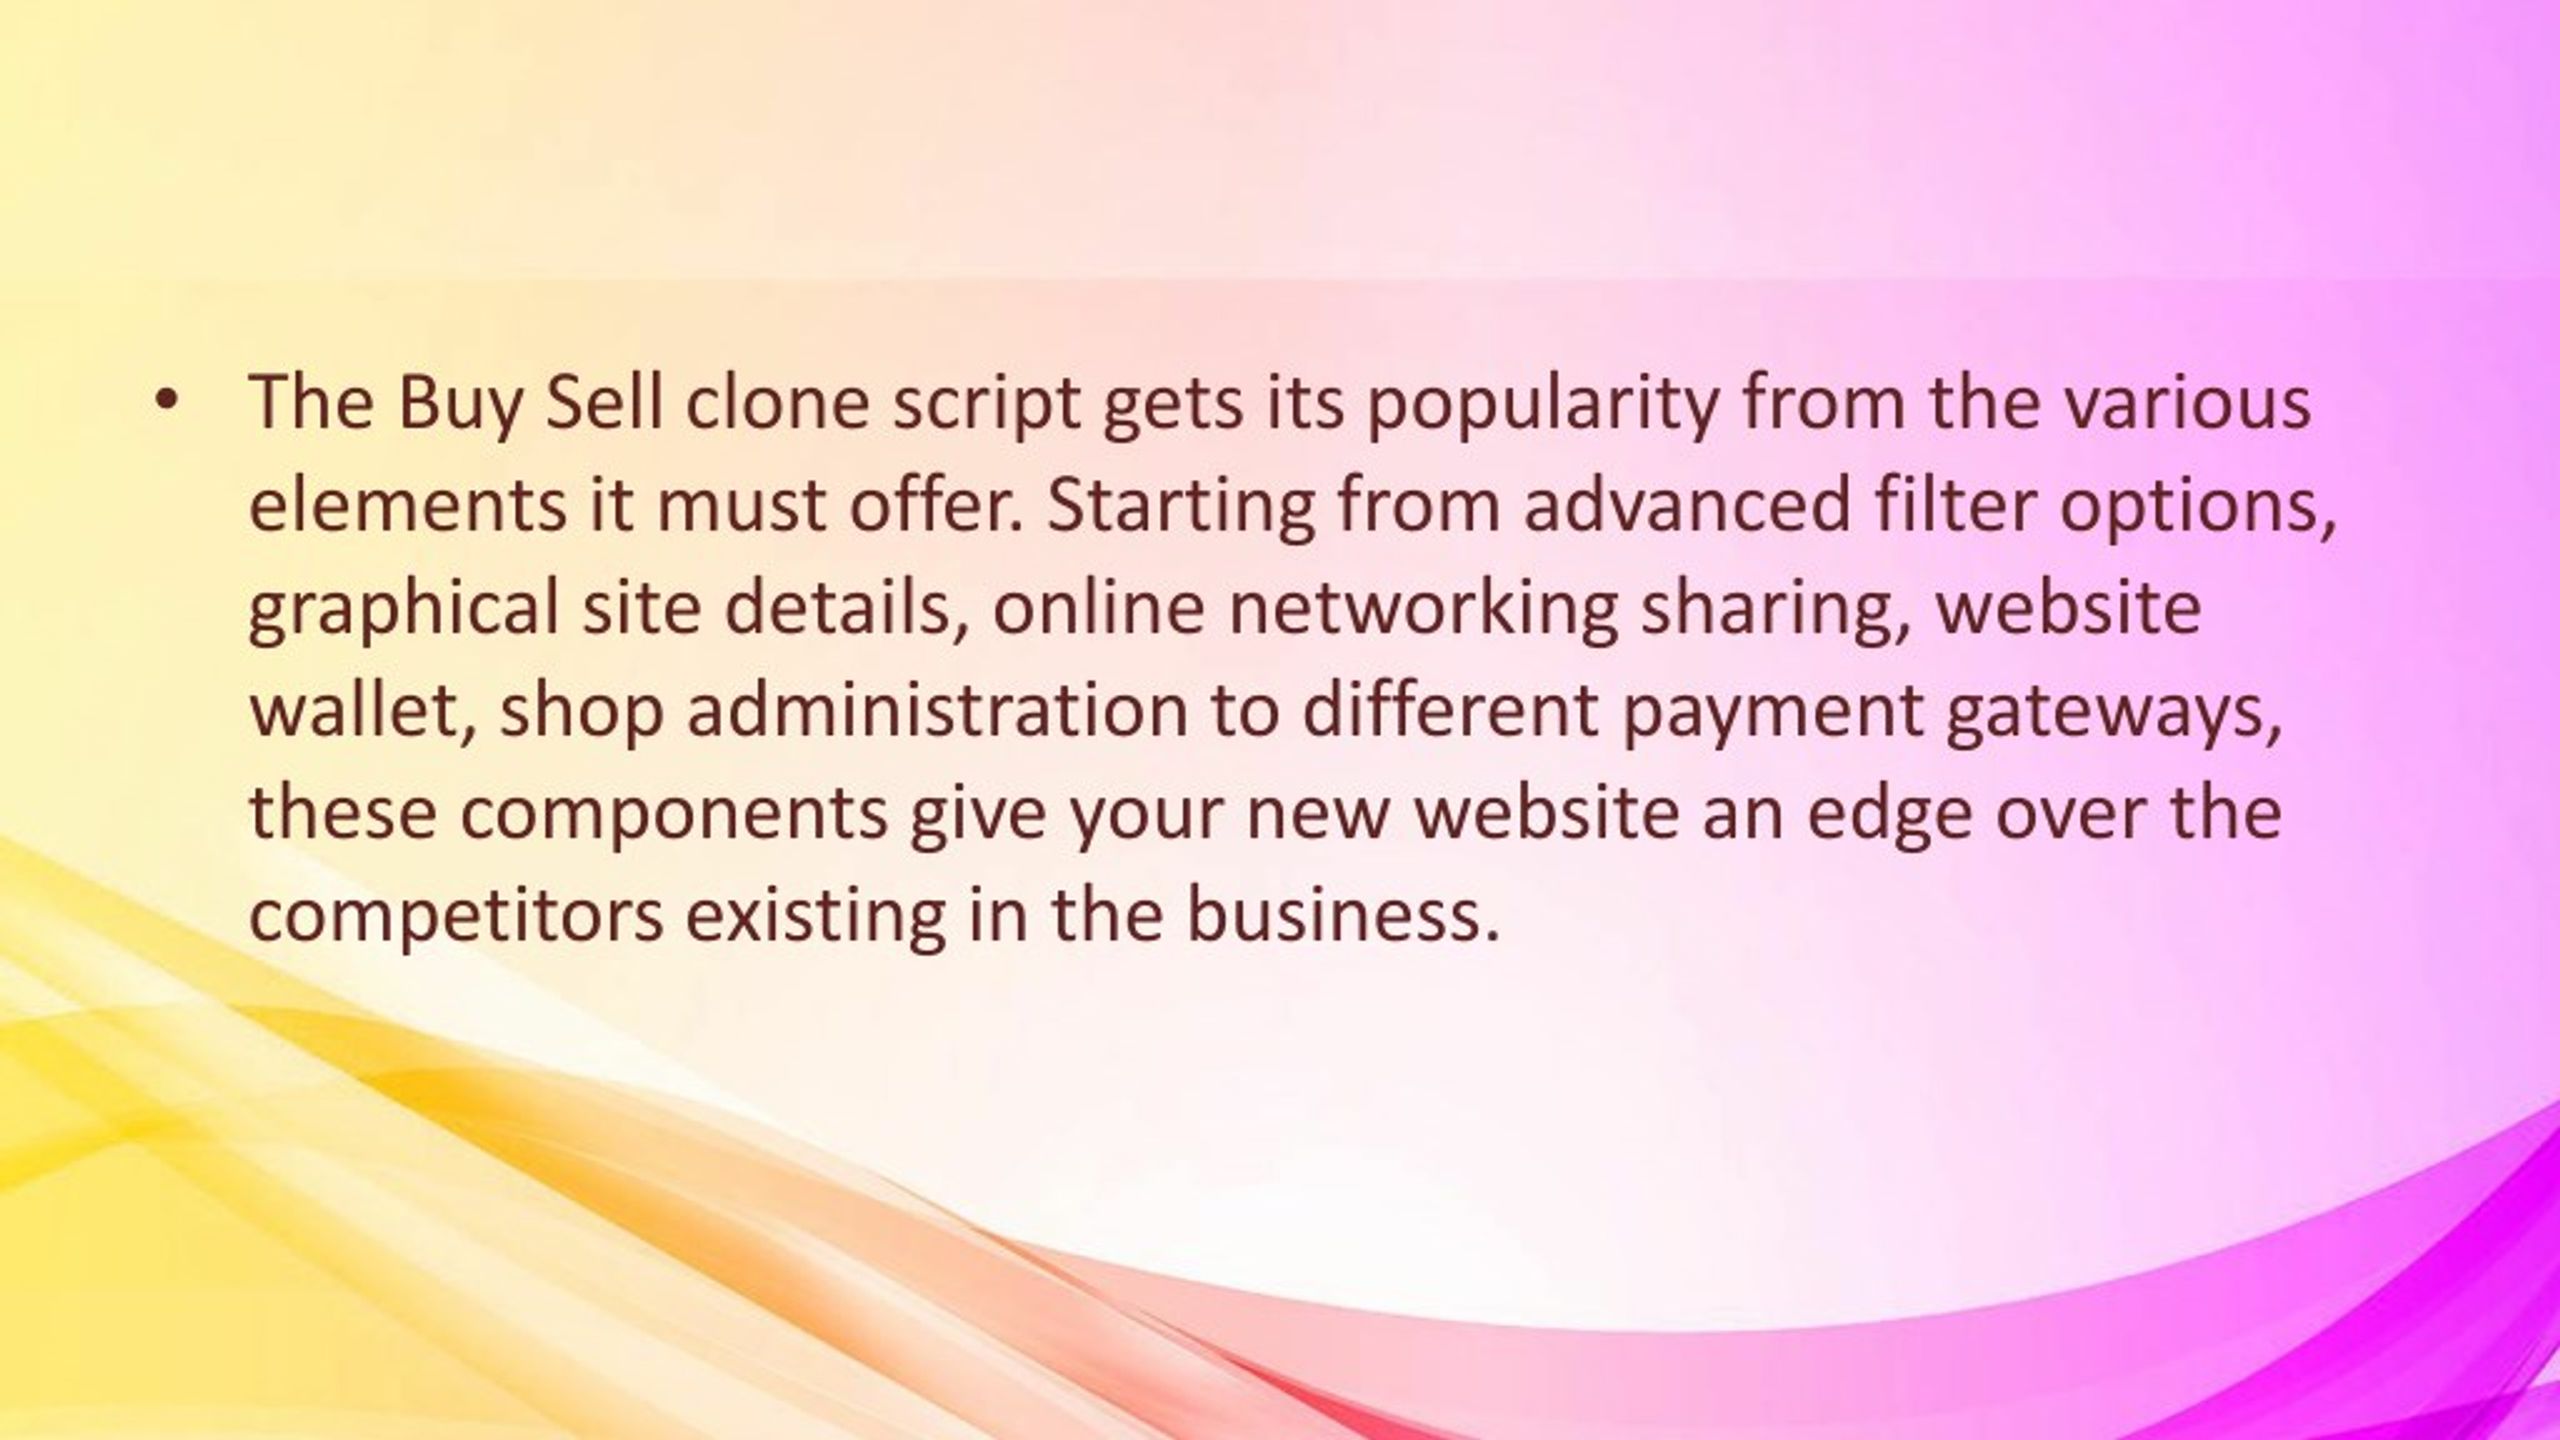 Olx Clone Script, Up to 50% Offer